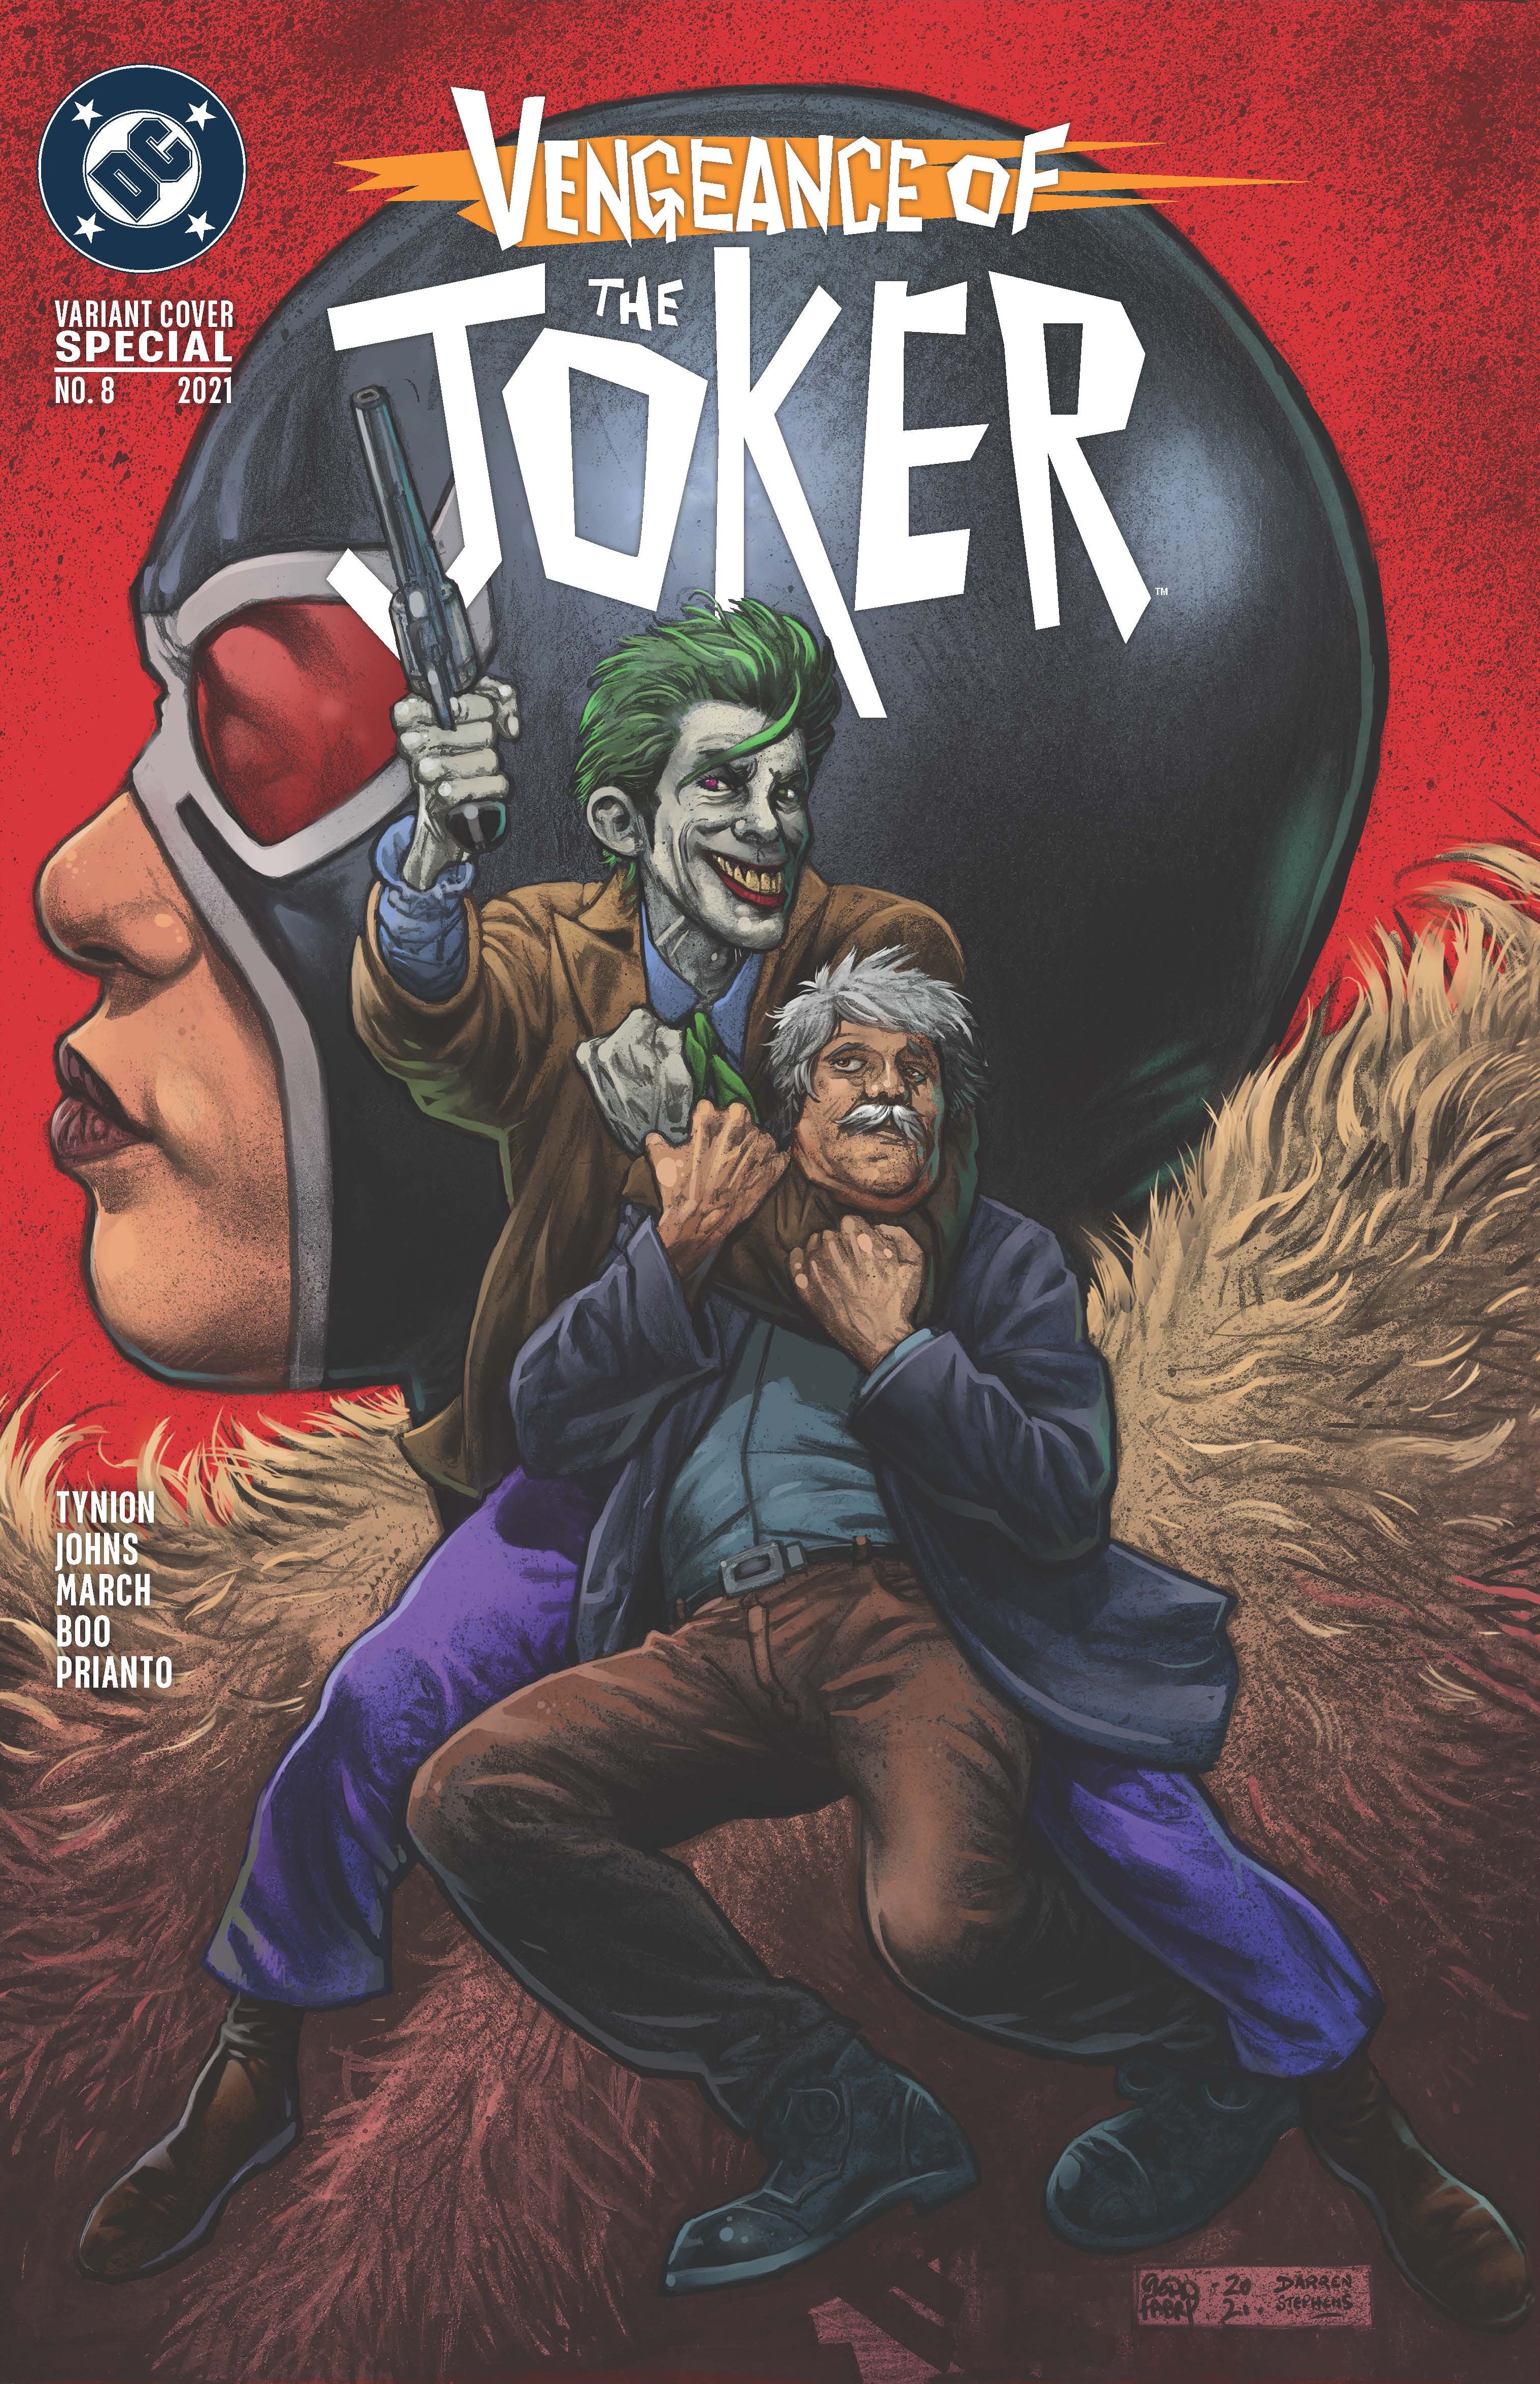 Joker #8 Glen Fabry Exclusive Cover - State of Comics